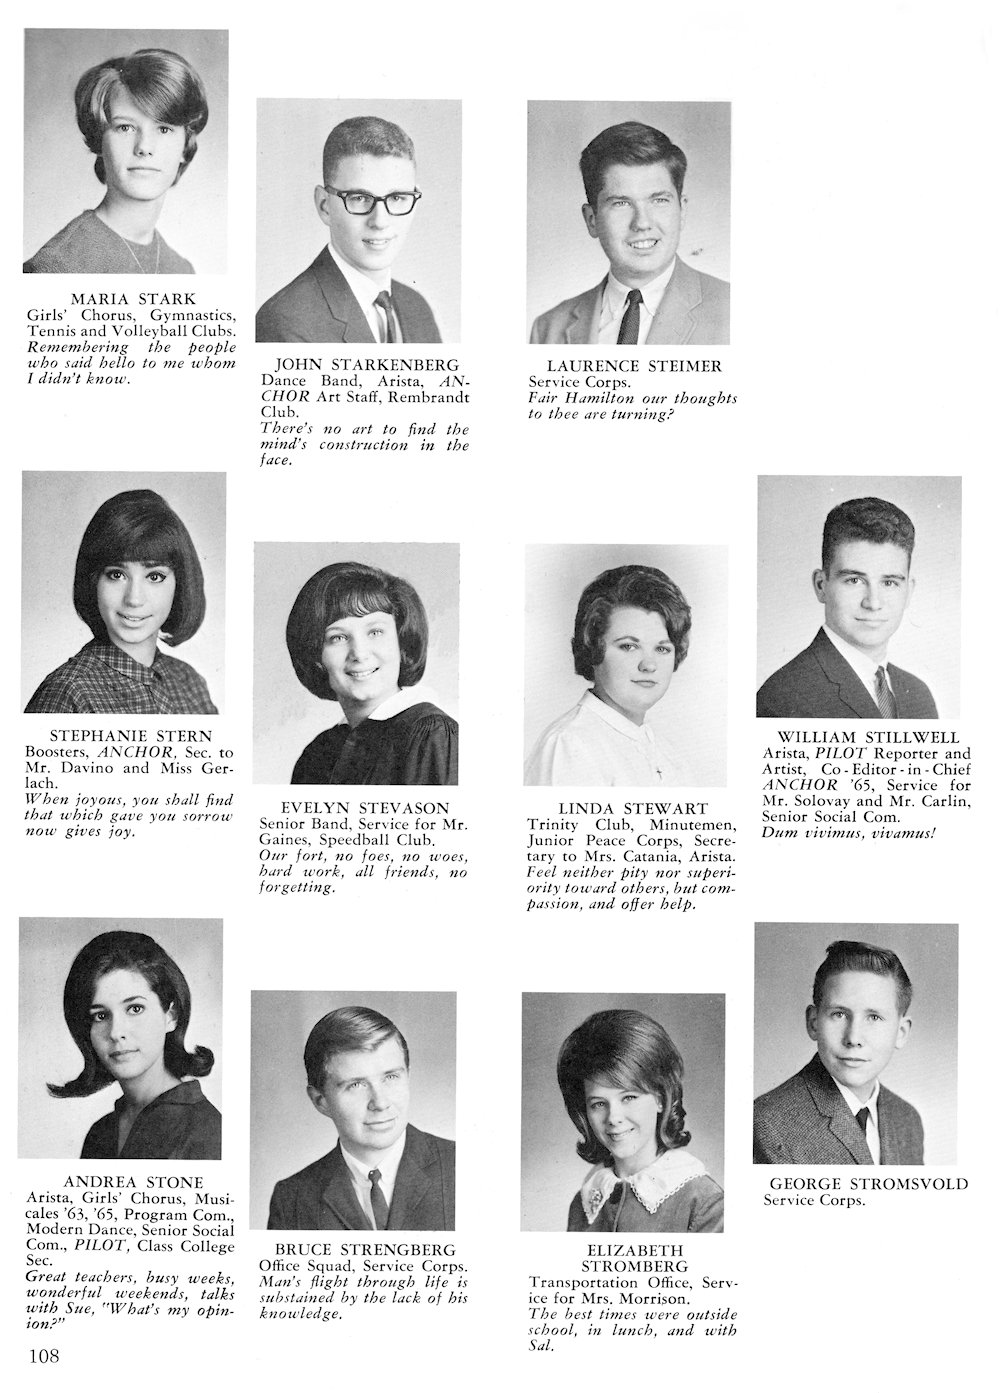 Stark-Stromsvold page from Fort Hamilton High School 1965